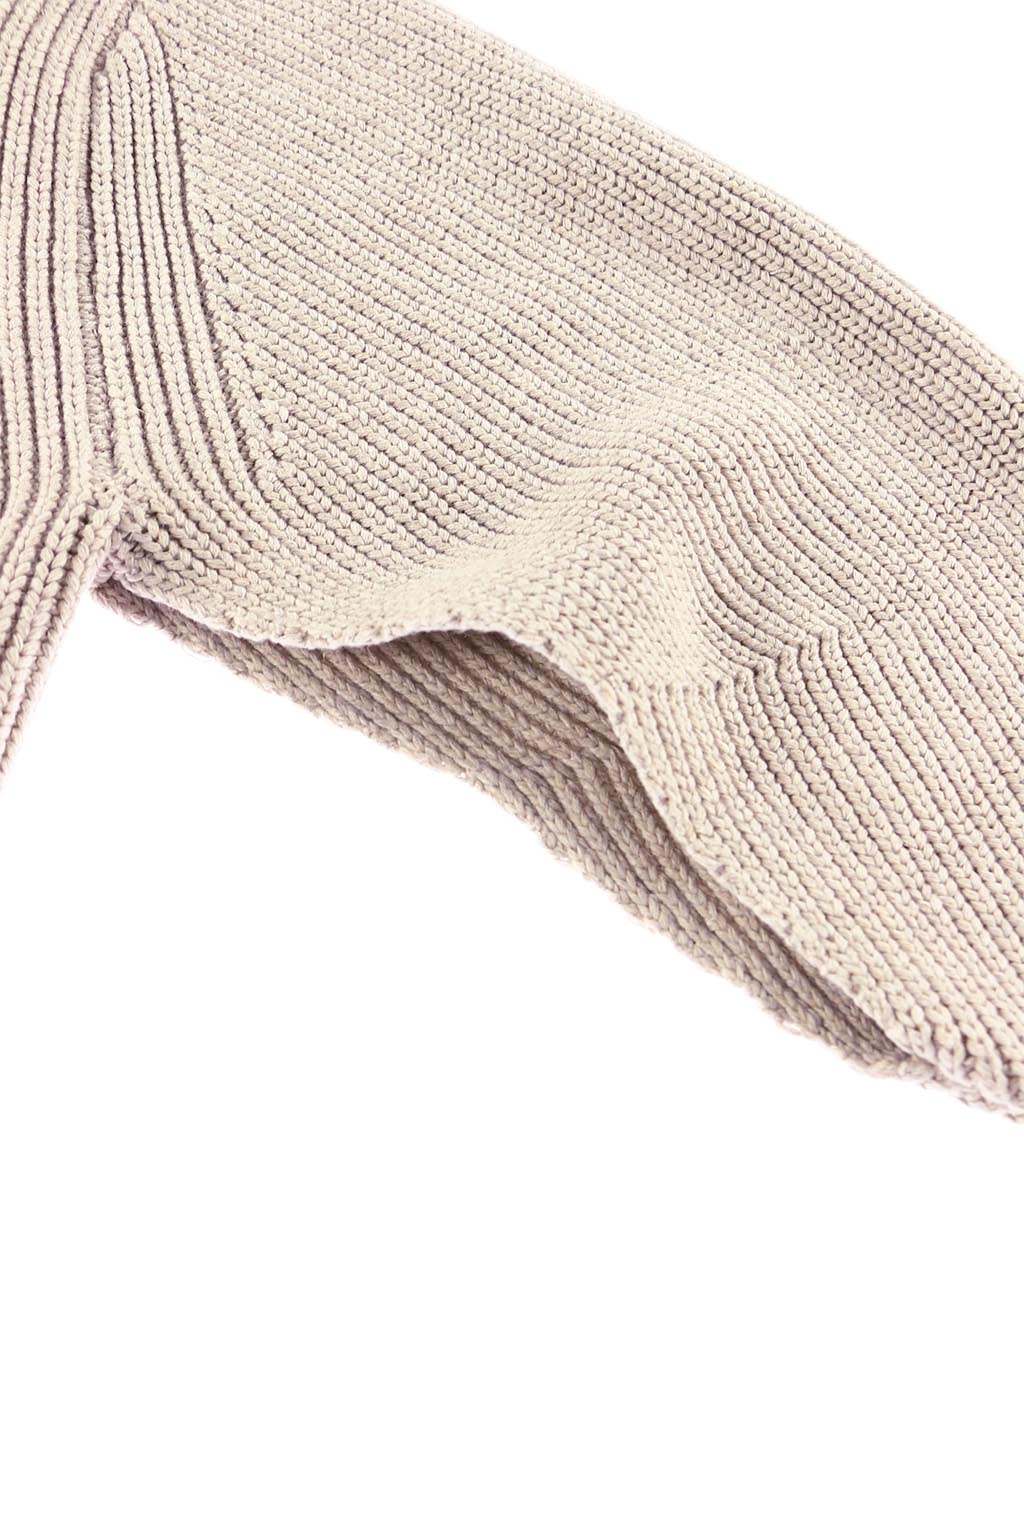 concho-button-knit-cardgan-beige-11